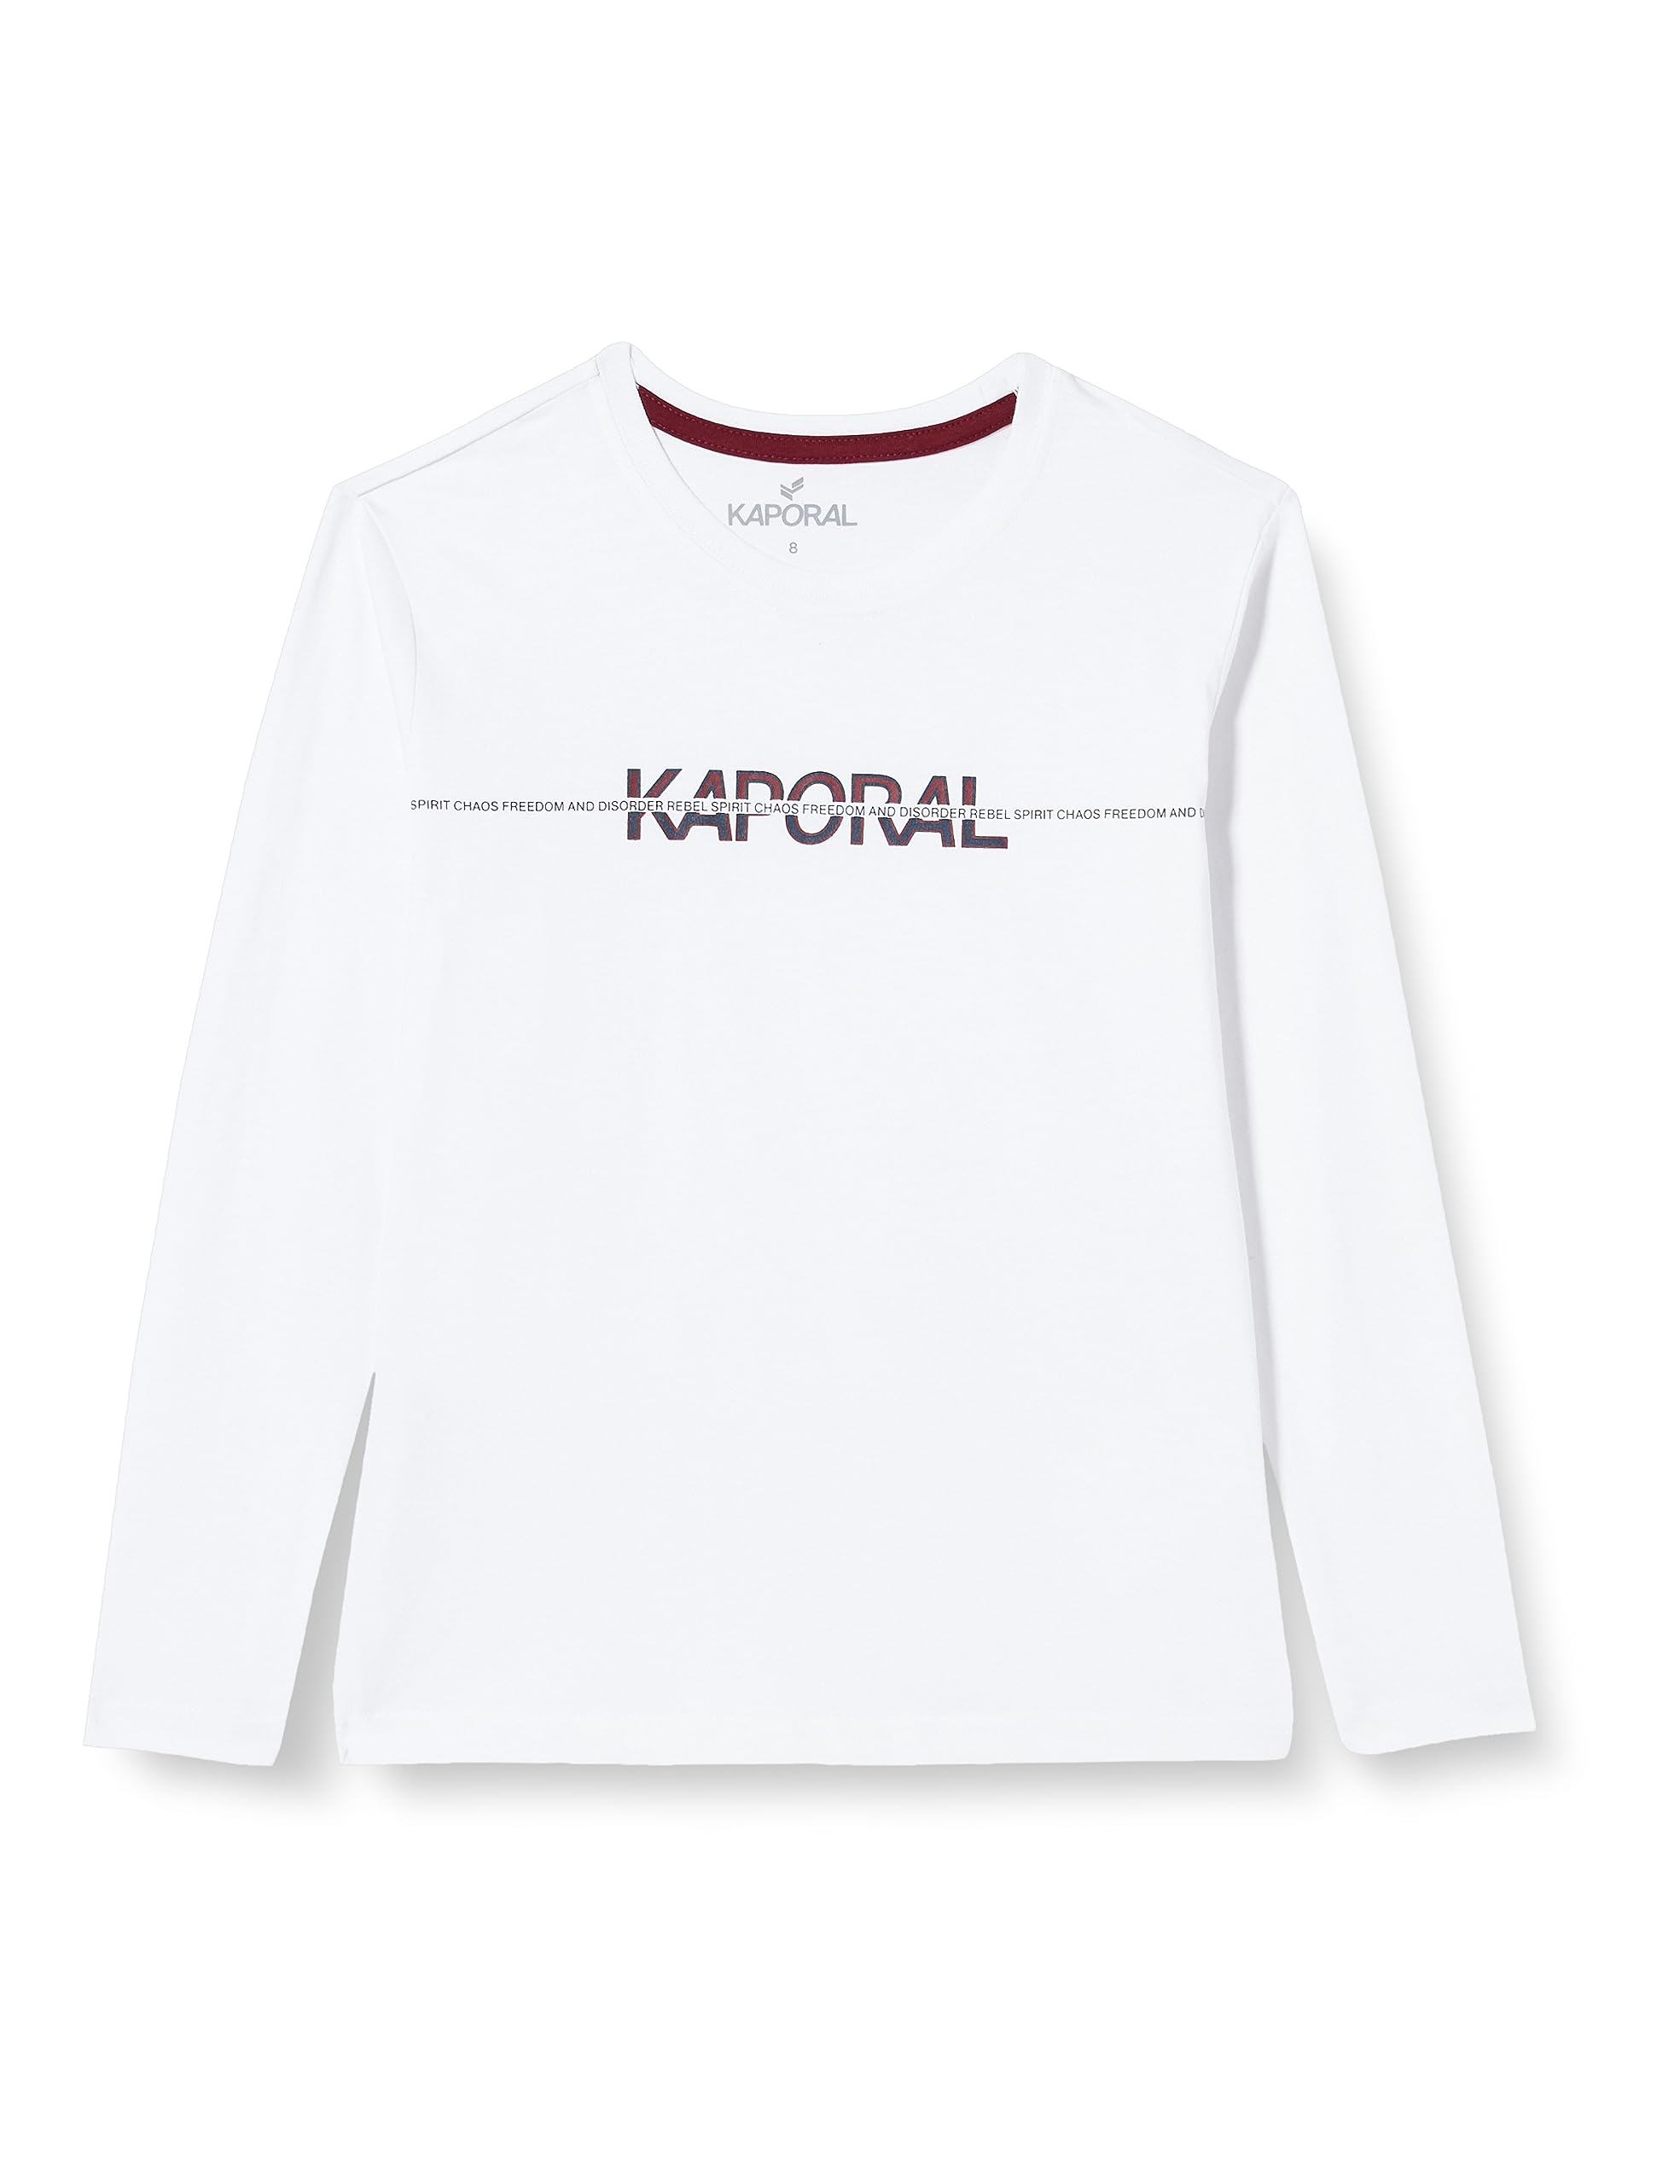 Populaire Kaporal Eveny T-Shirt Garçon Nr3q0s8Wq stylé 